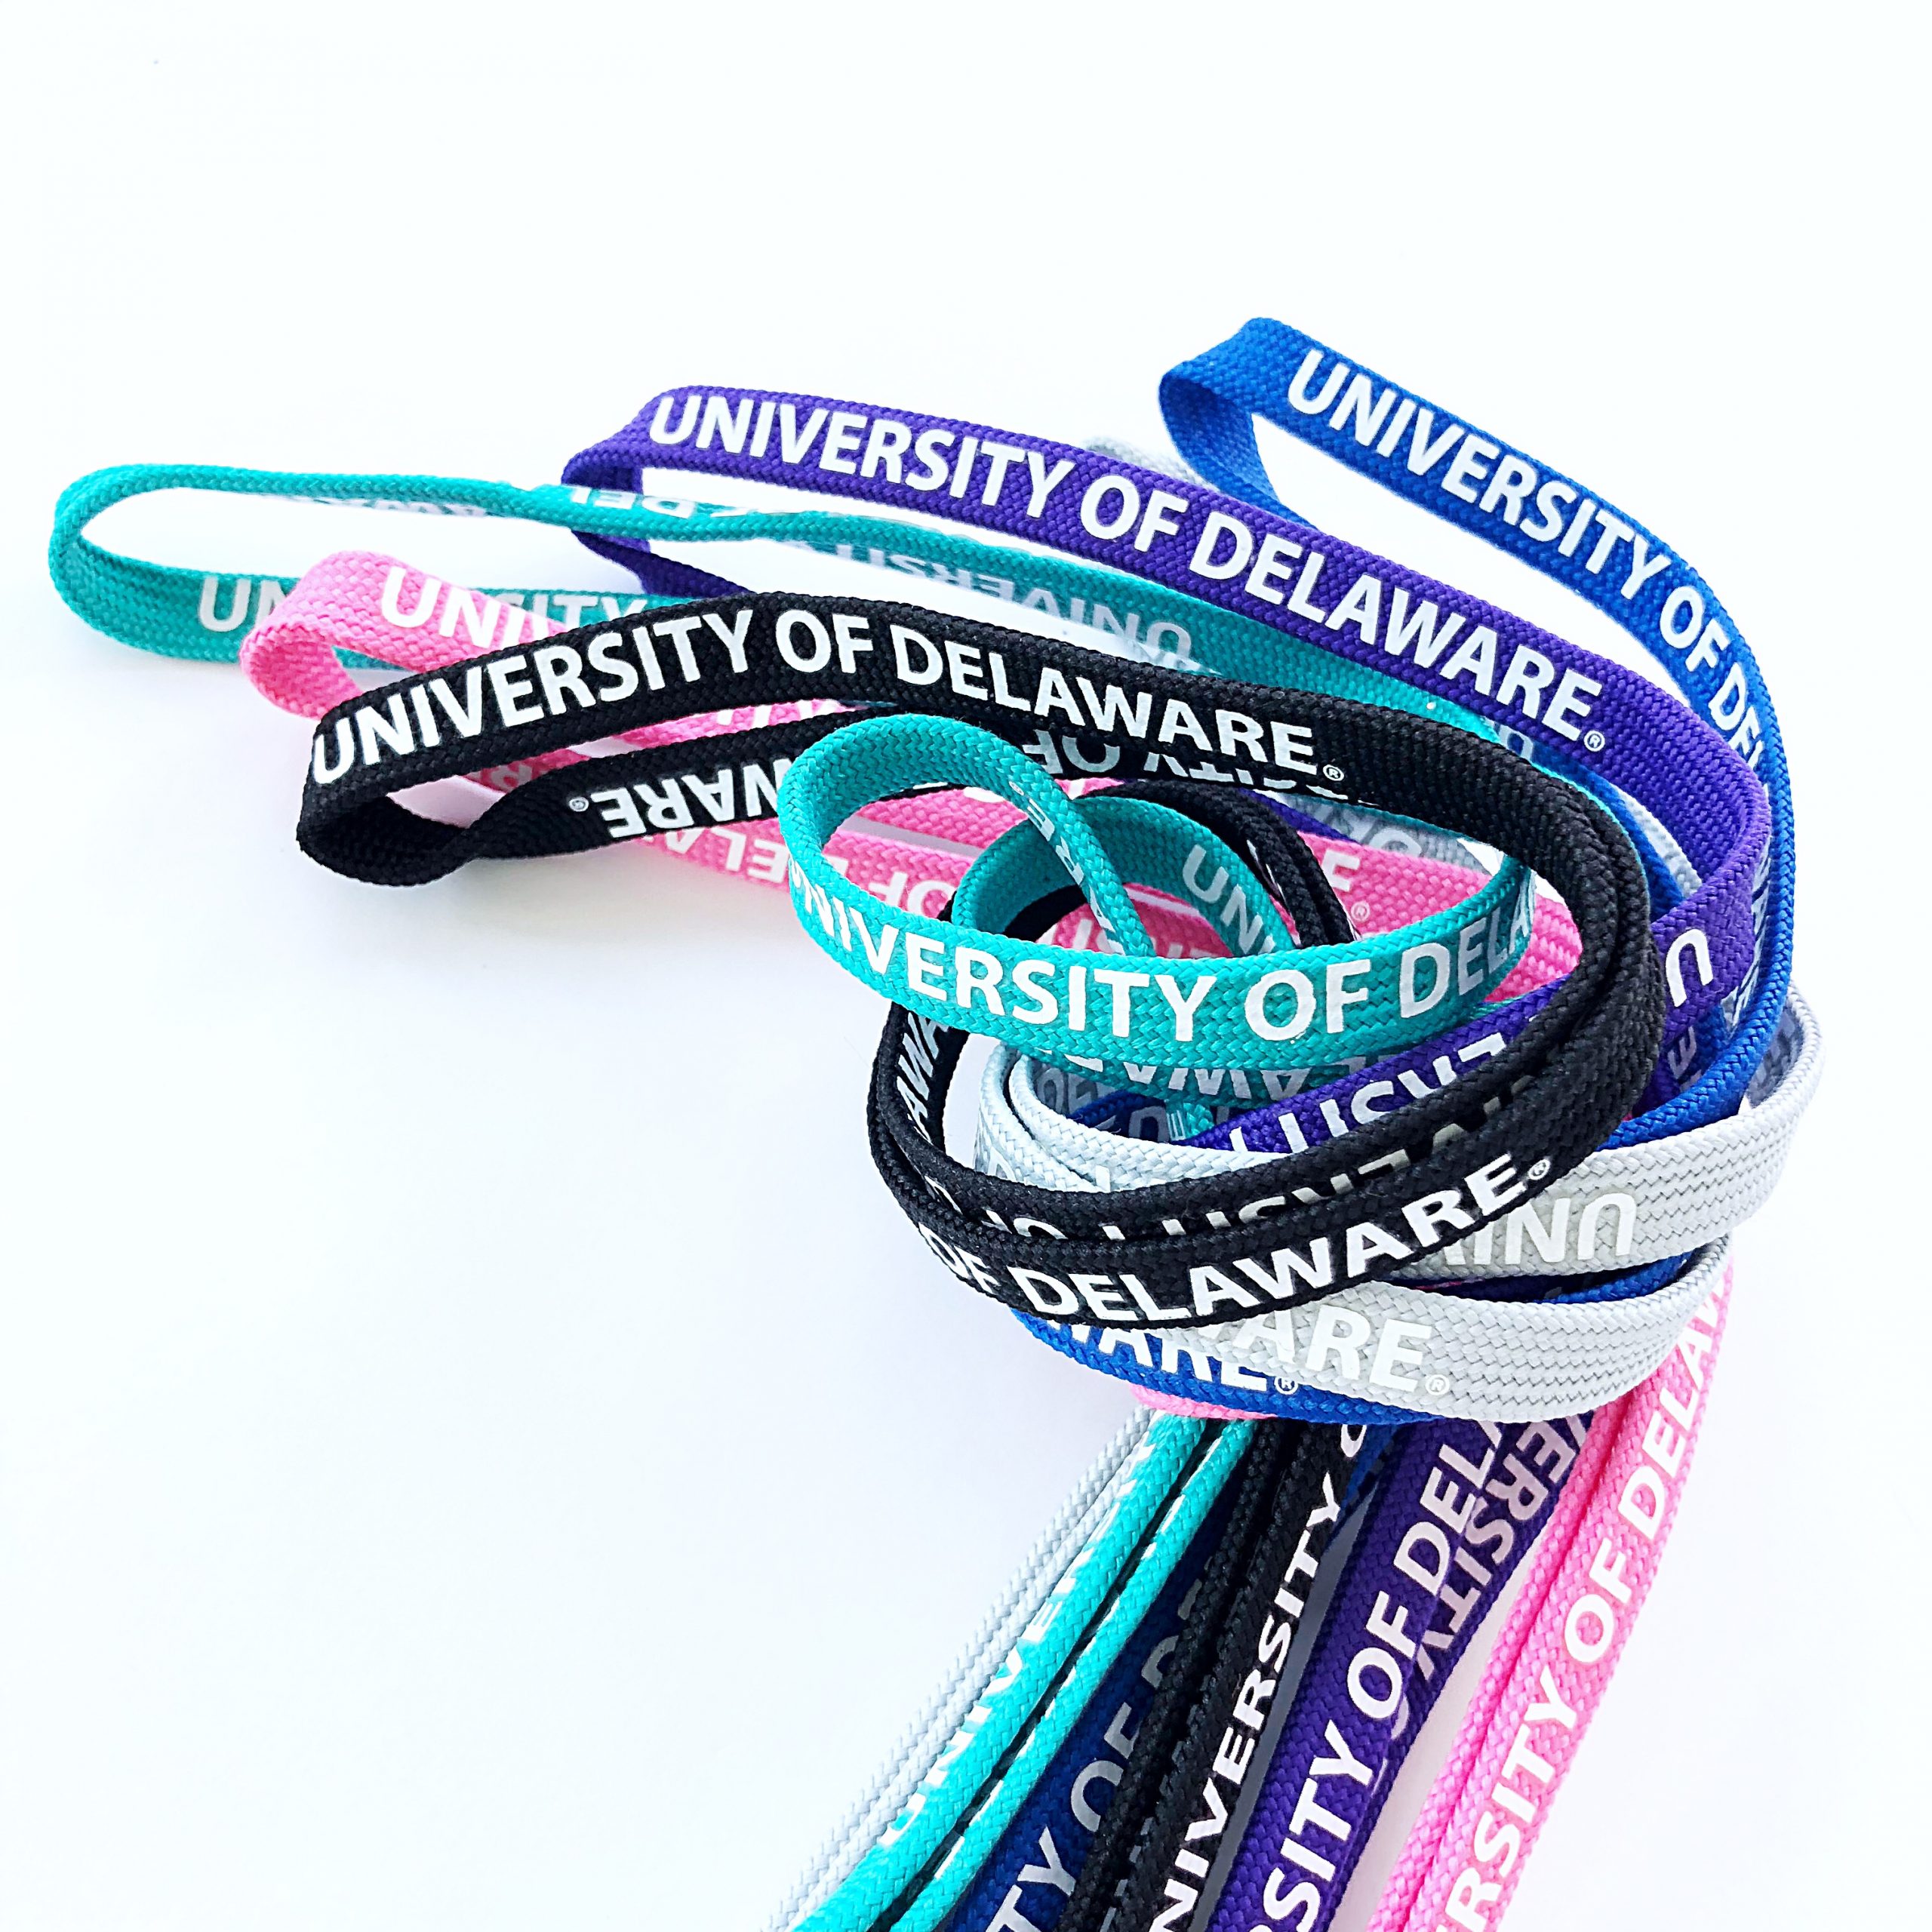 University of Delaware Shoelace Lanyard – National 5 and 10